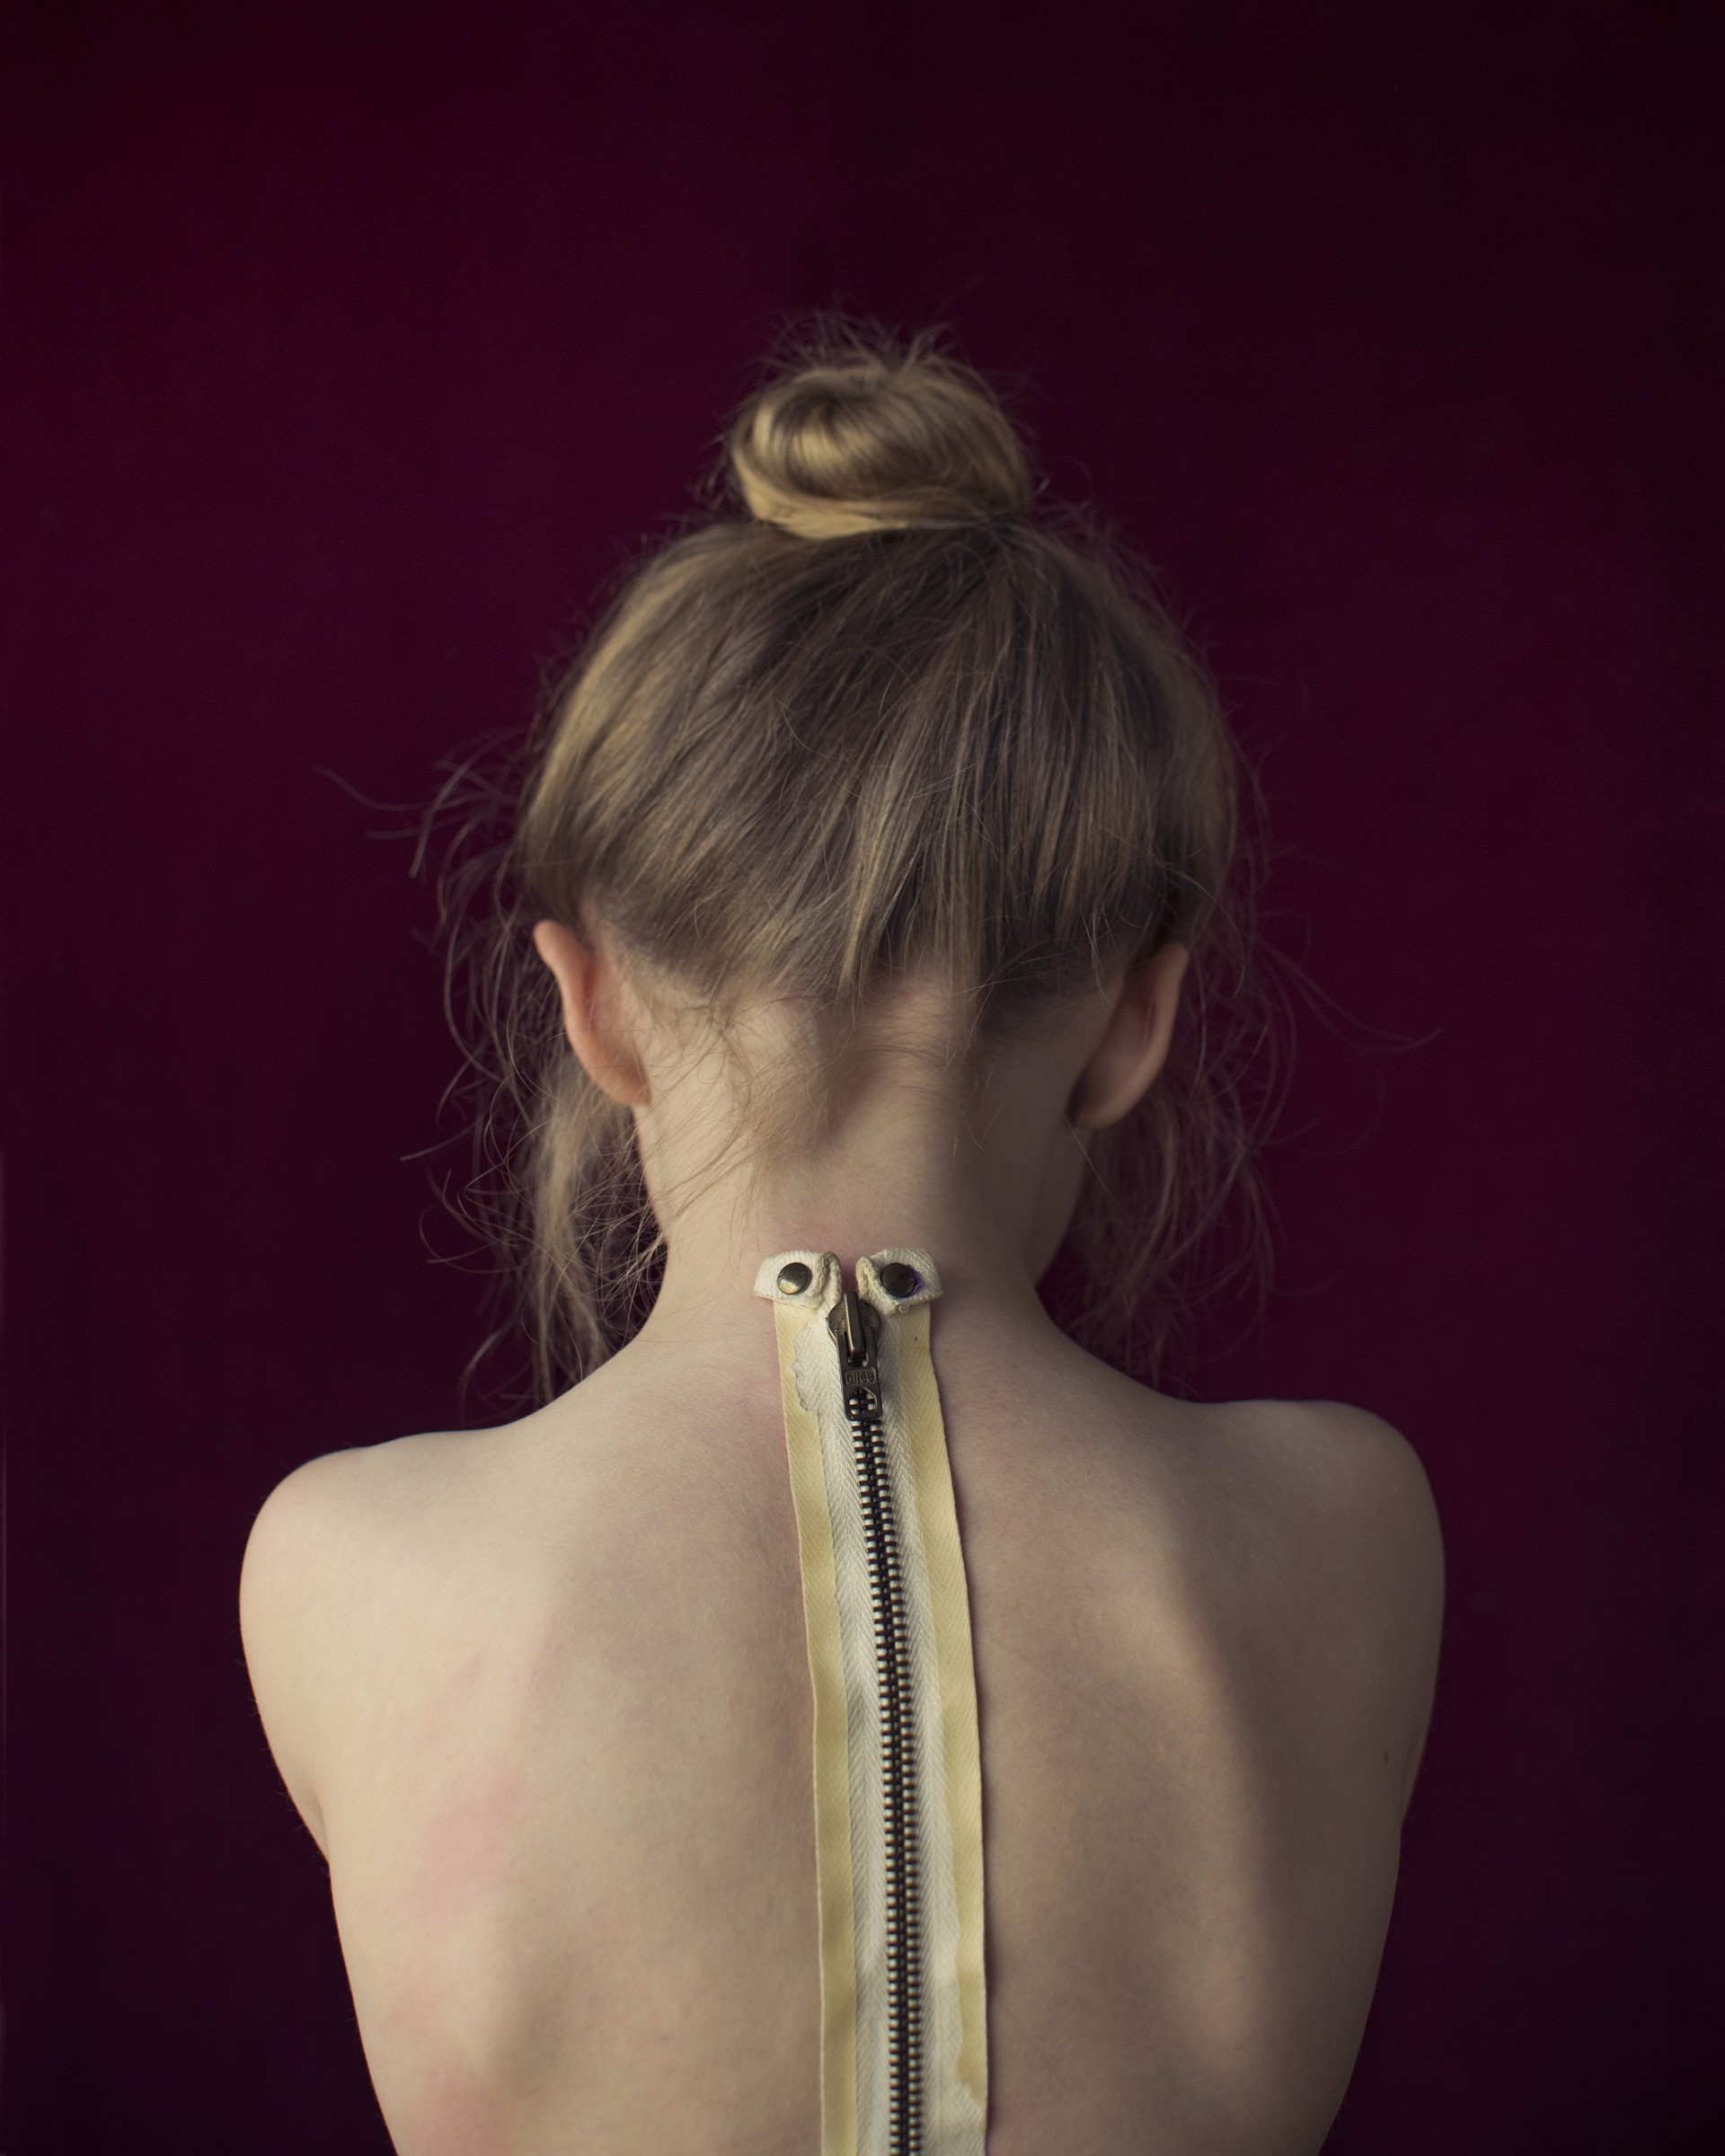 Zipper by Heather Evans Smith